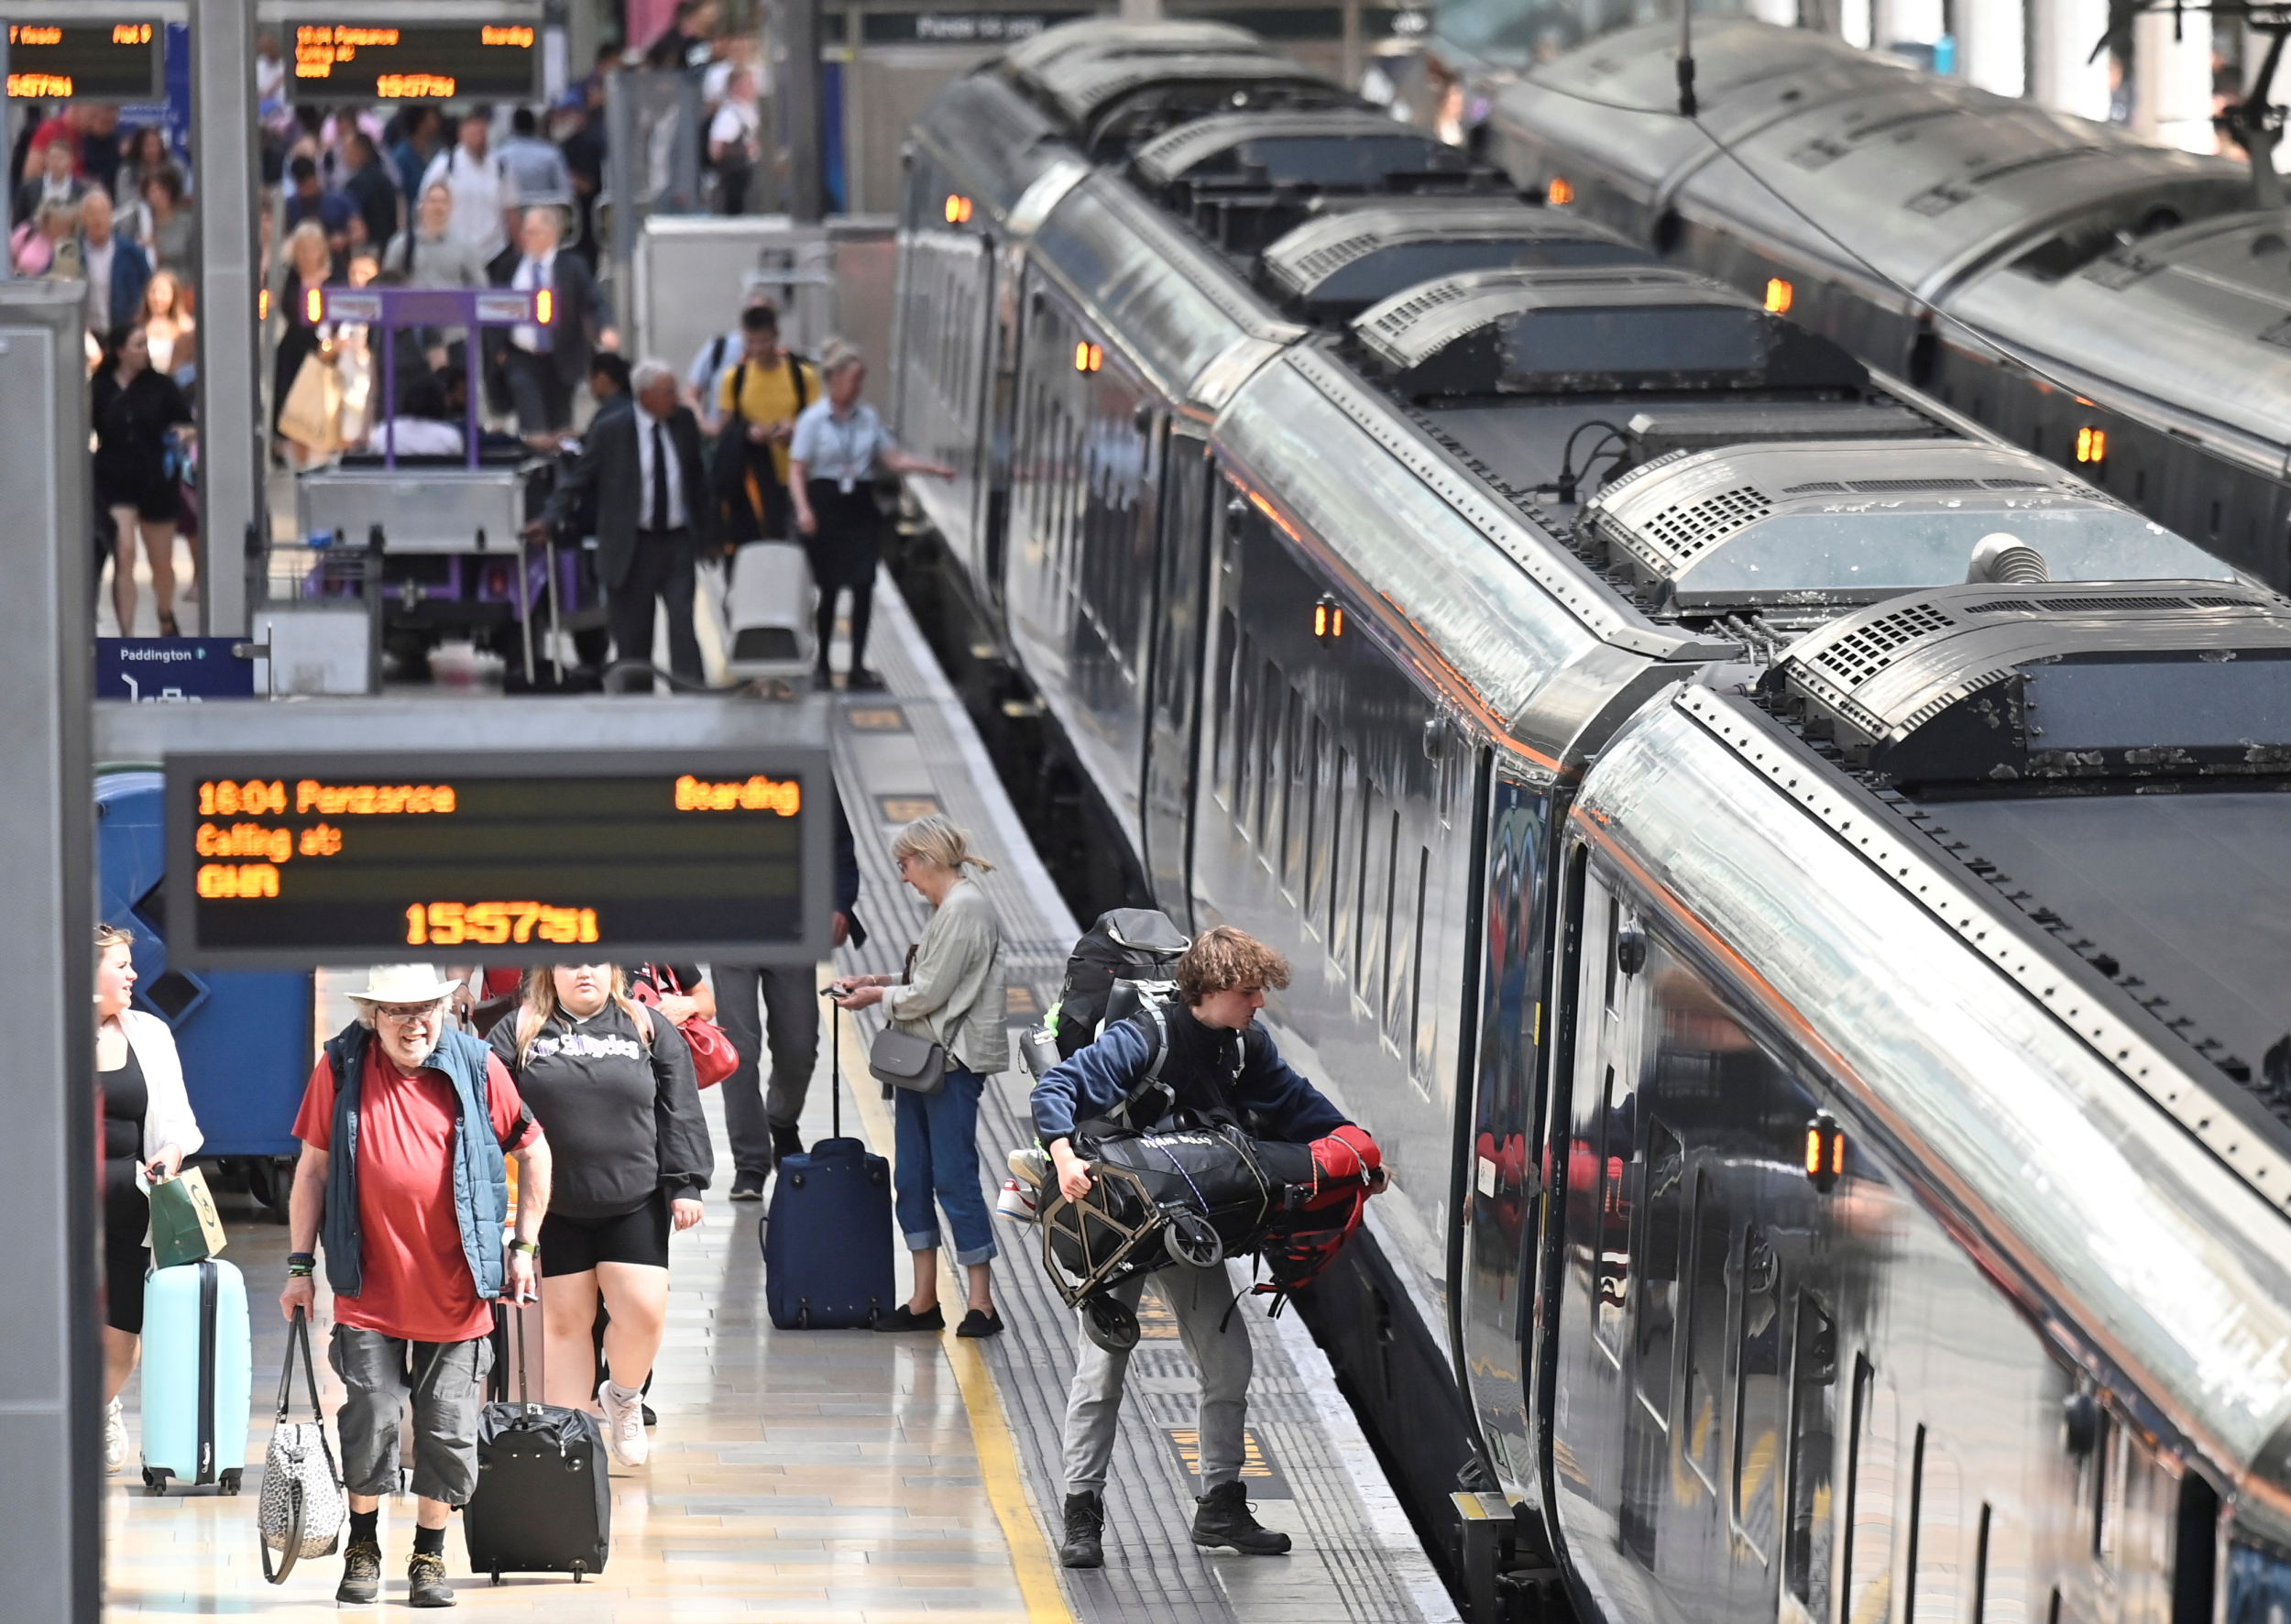 Train services across England grind to a halt as drivers go on strike